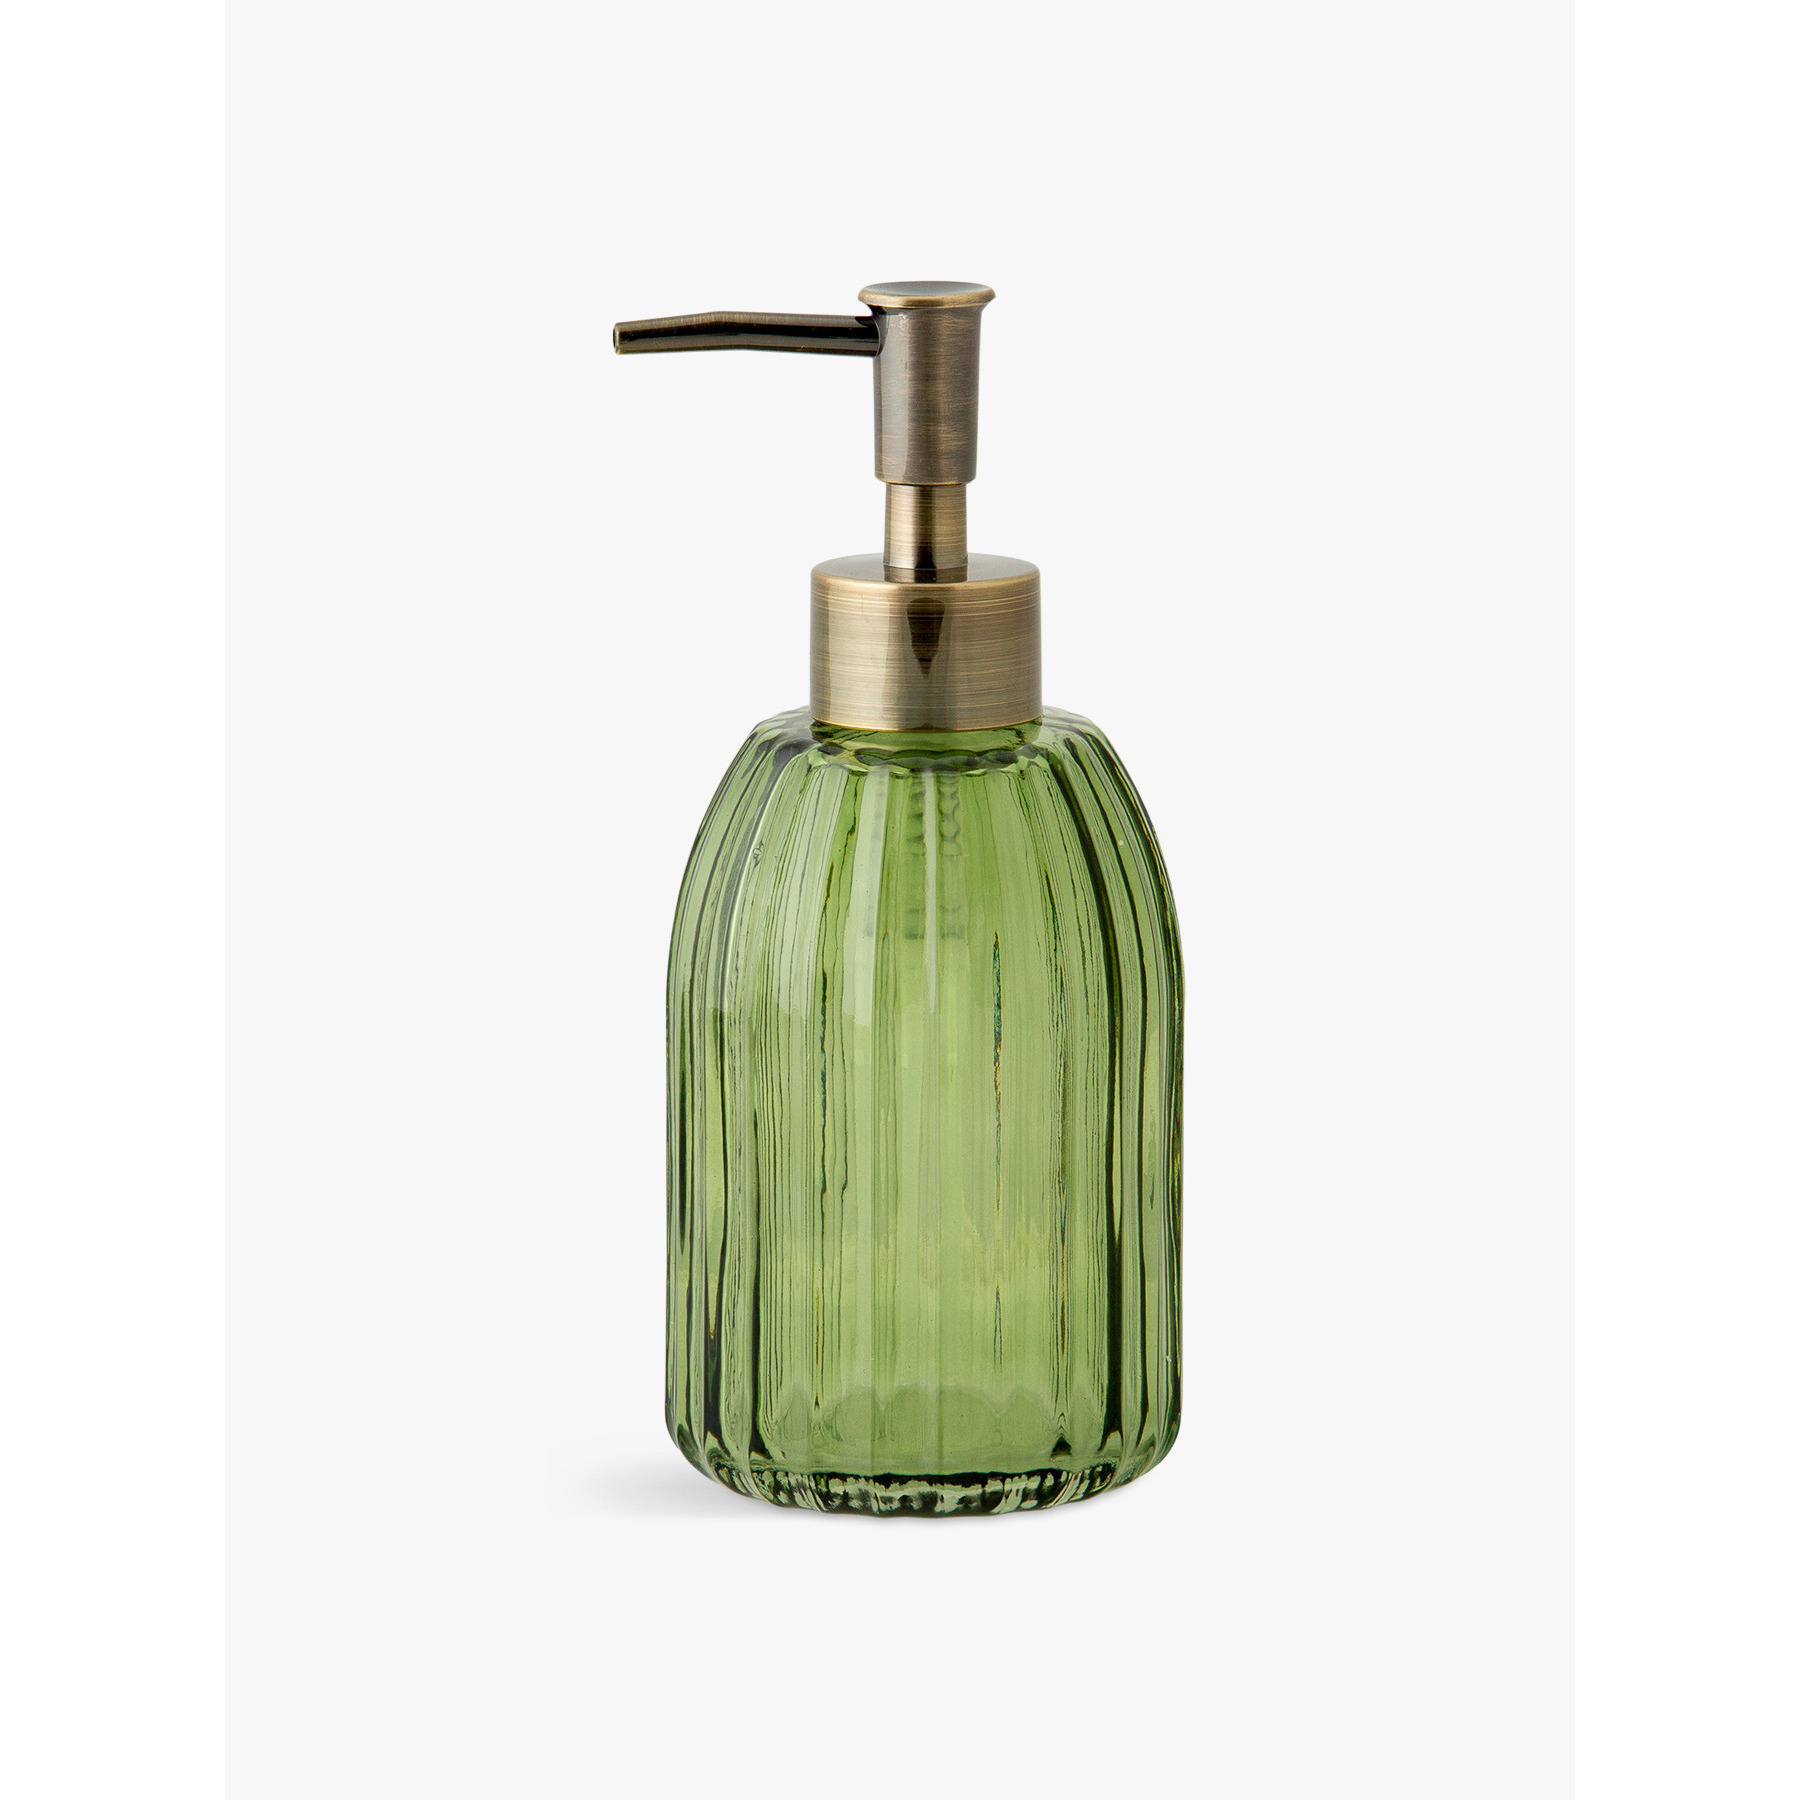 Andrea House Green Glass Soap Dispenser - image 1